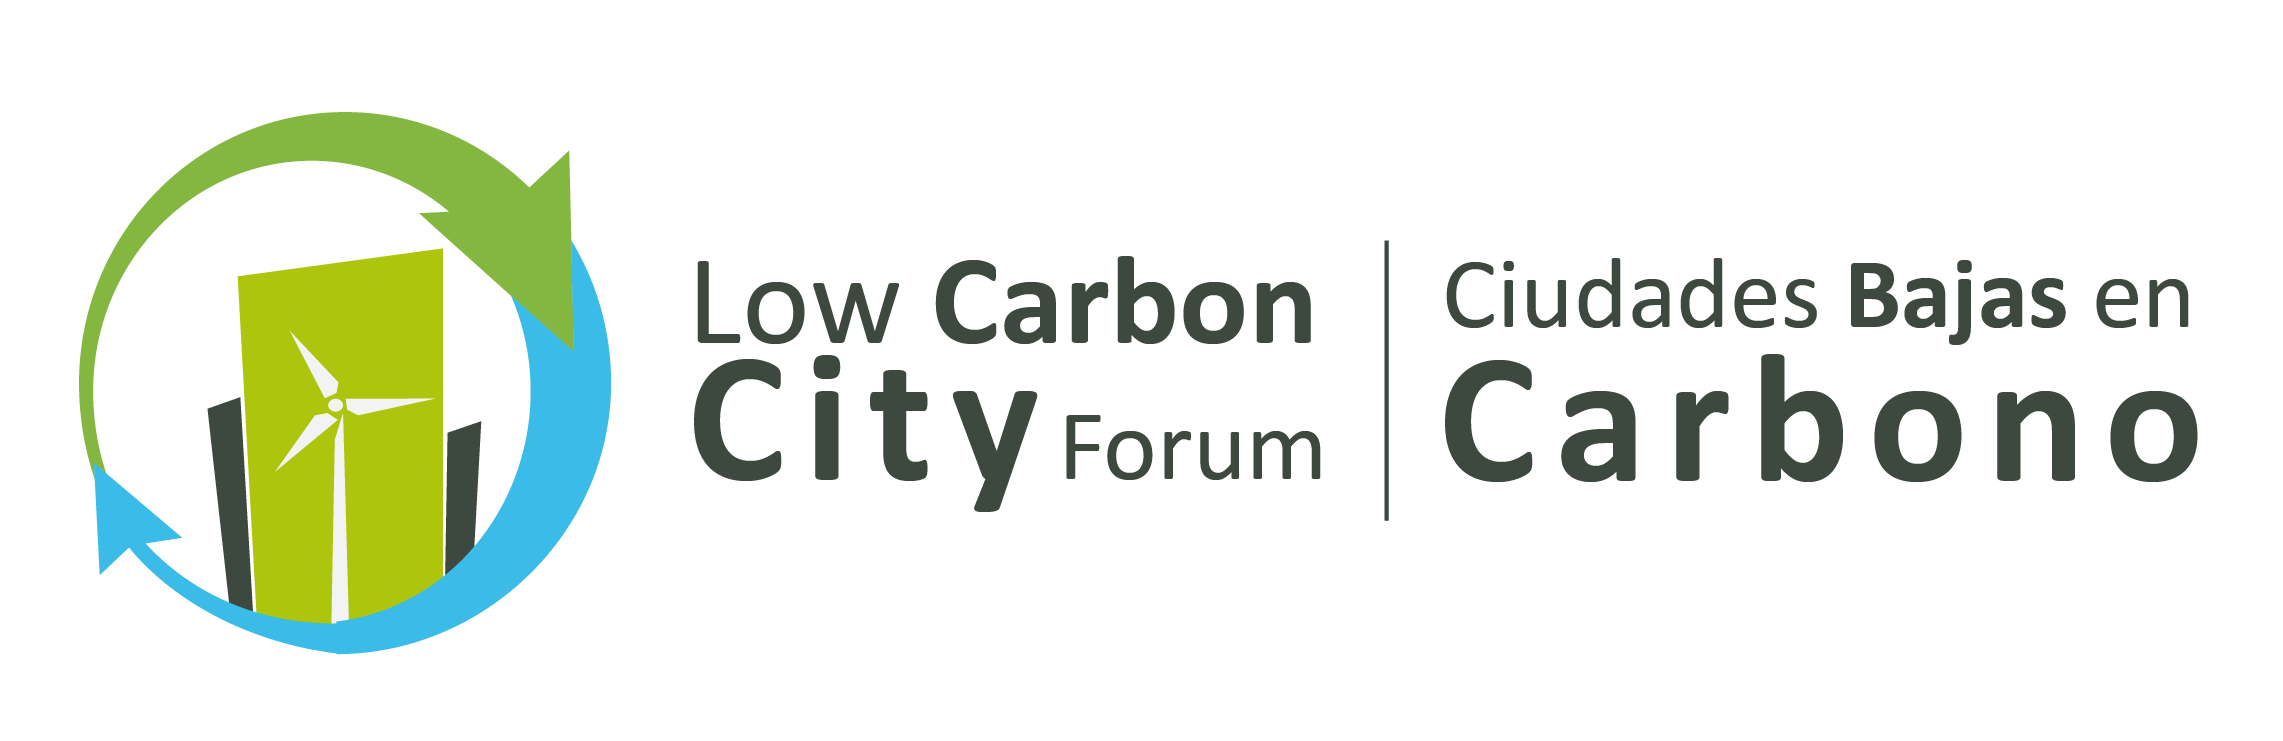 LowCarbonCityForum_Logo_20160110-03